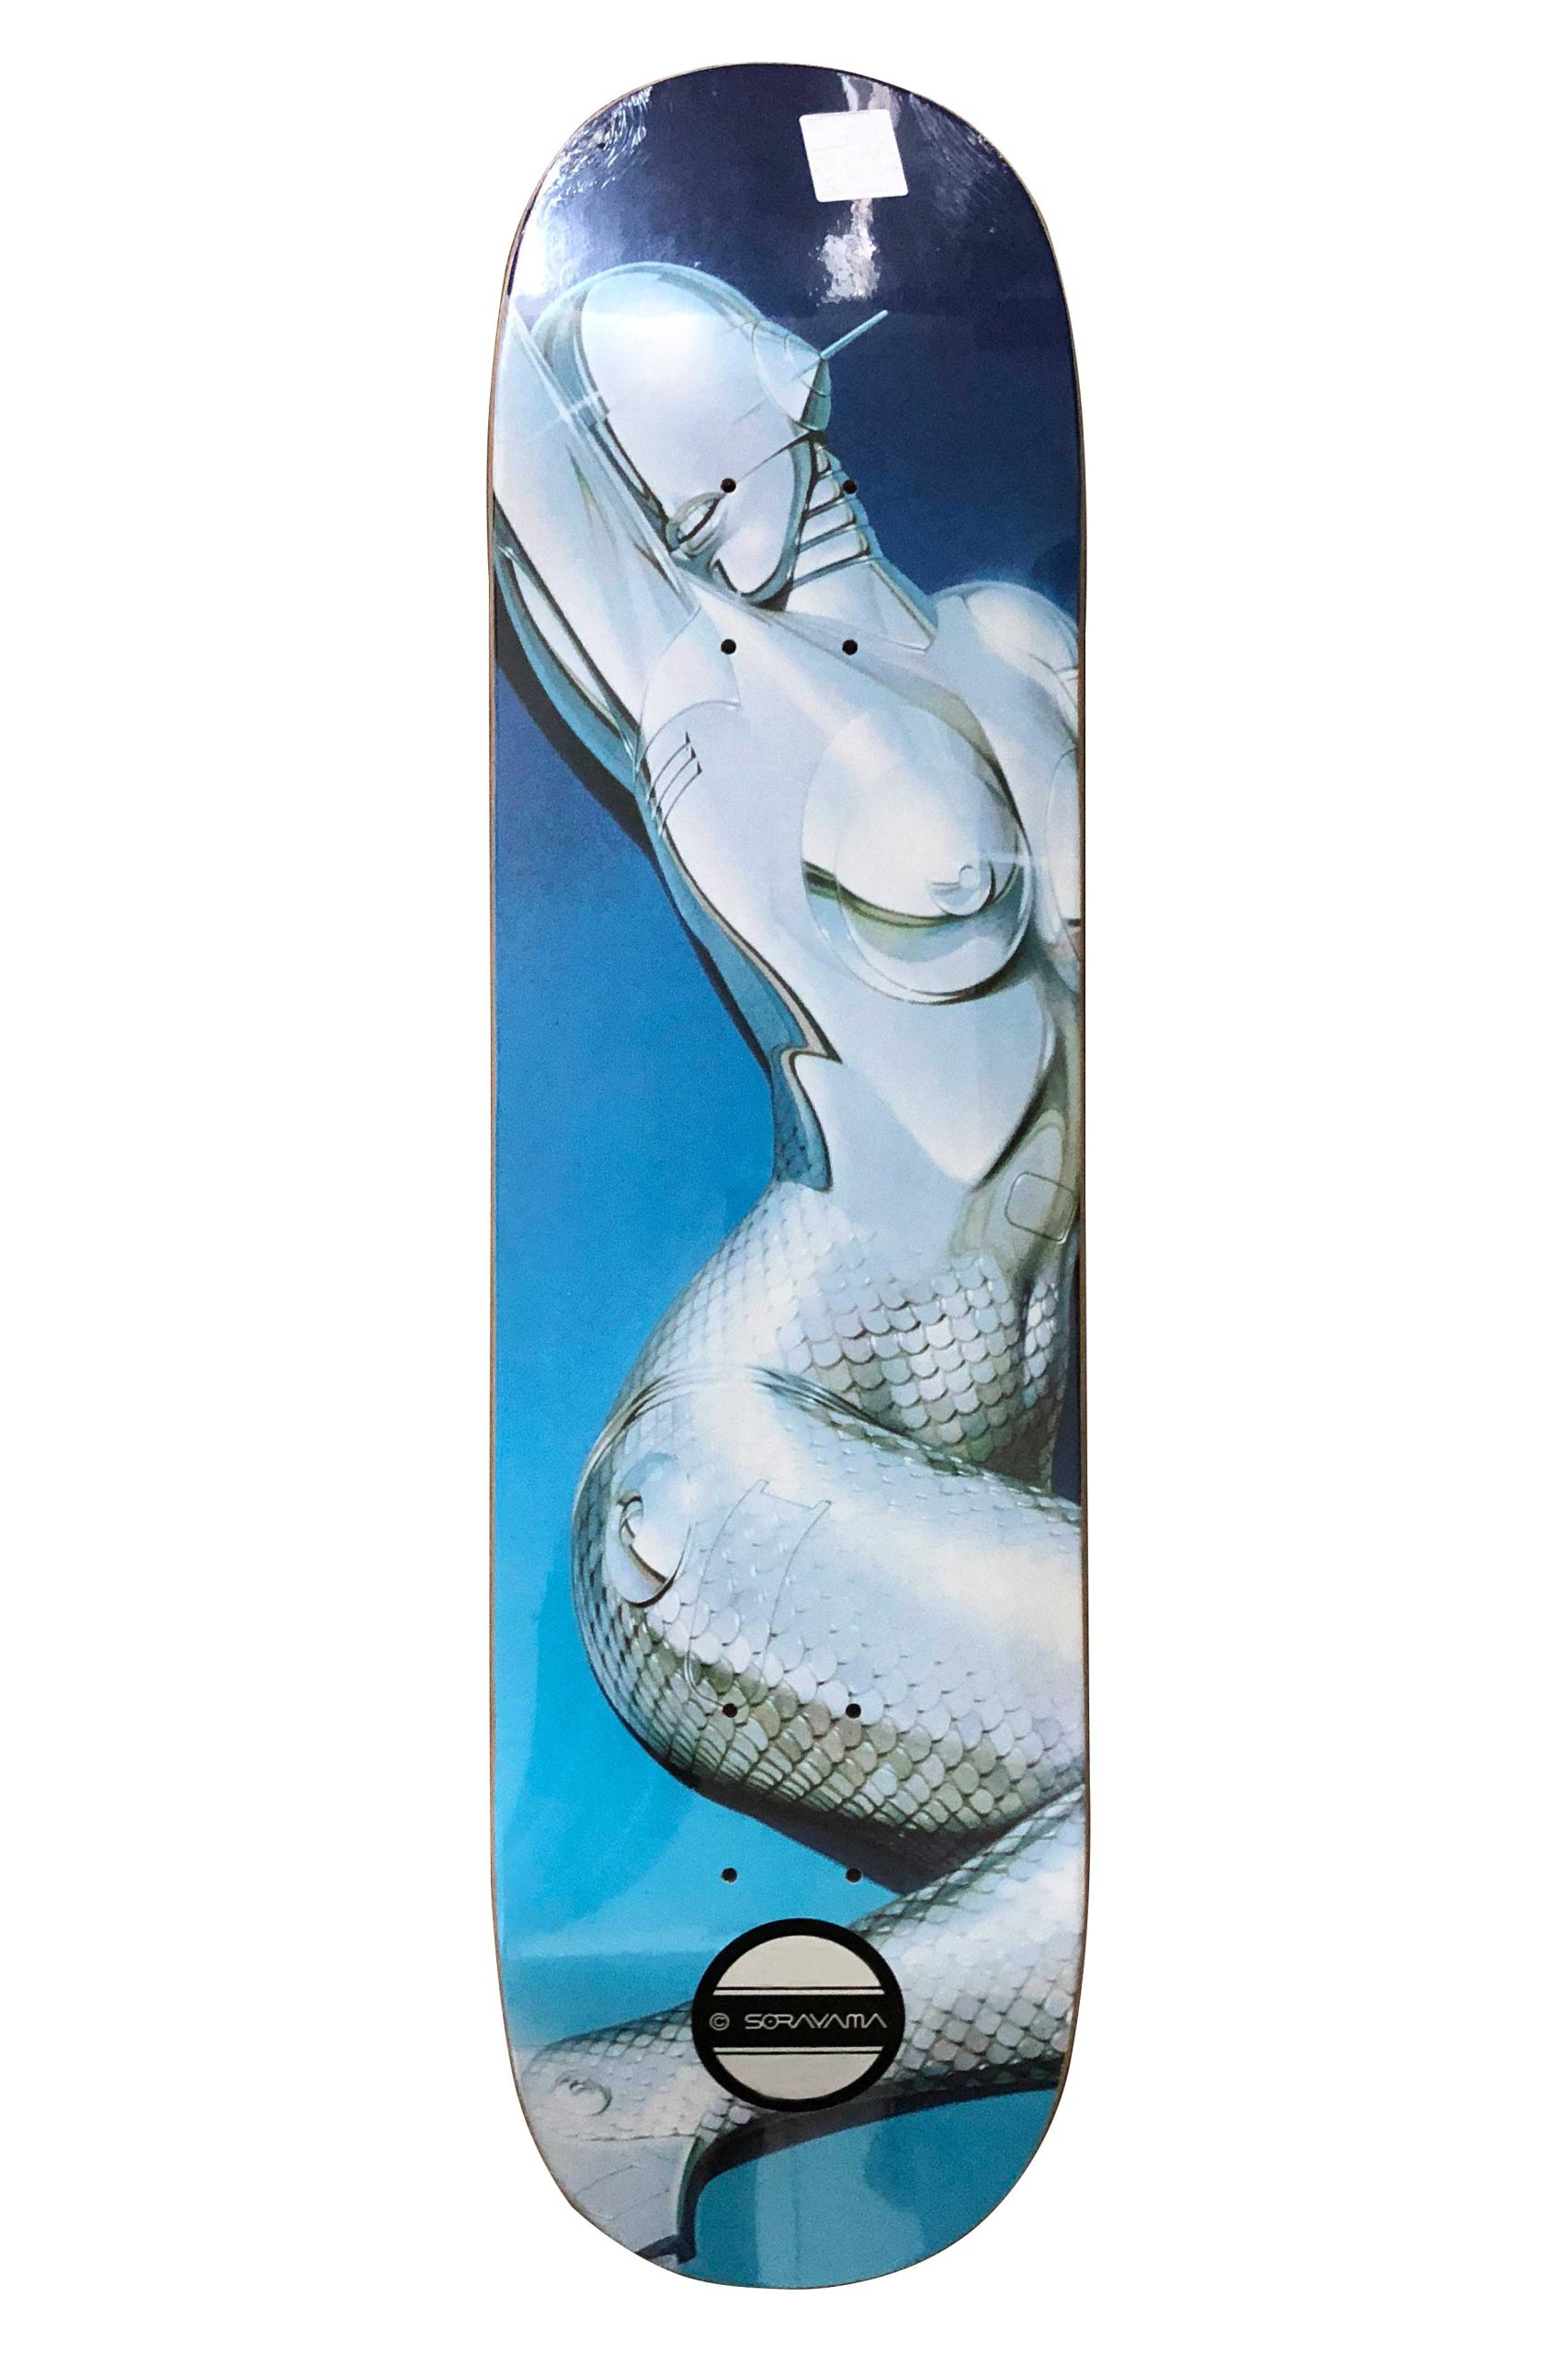 Hajime Sorayama Mermaid Robot Skateboard Skate Deck - artistskateboard.com